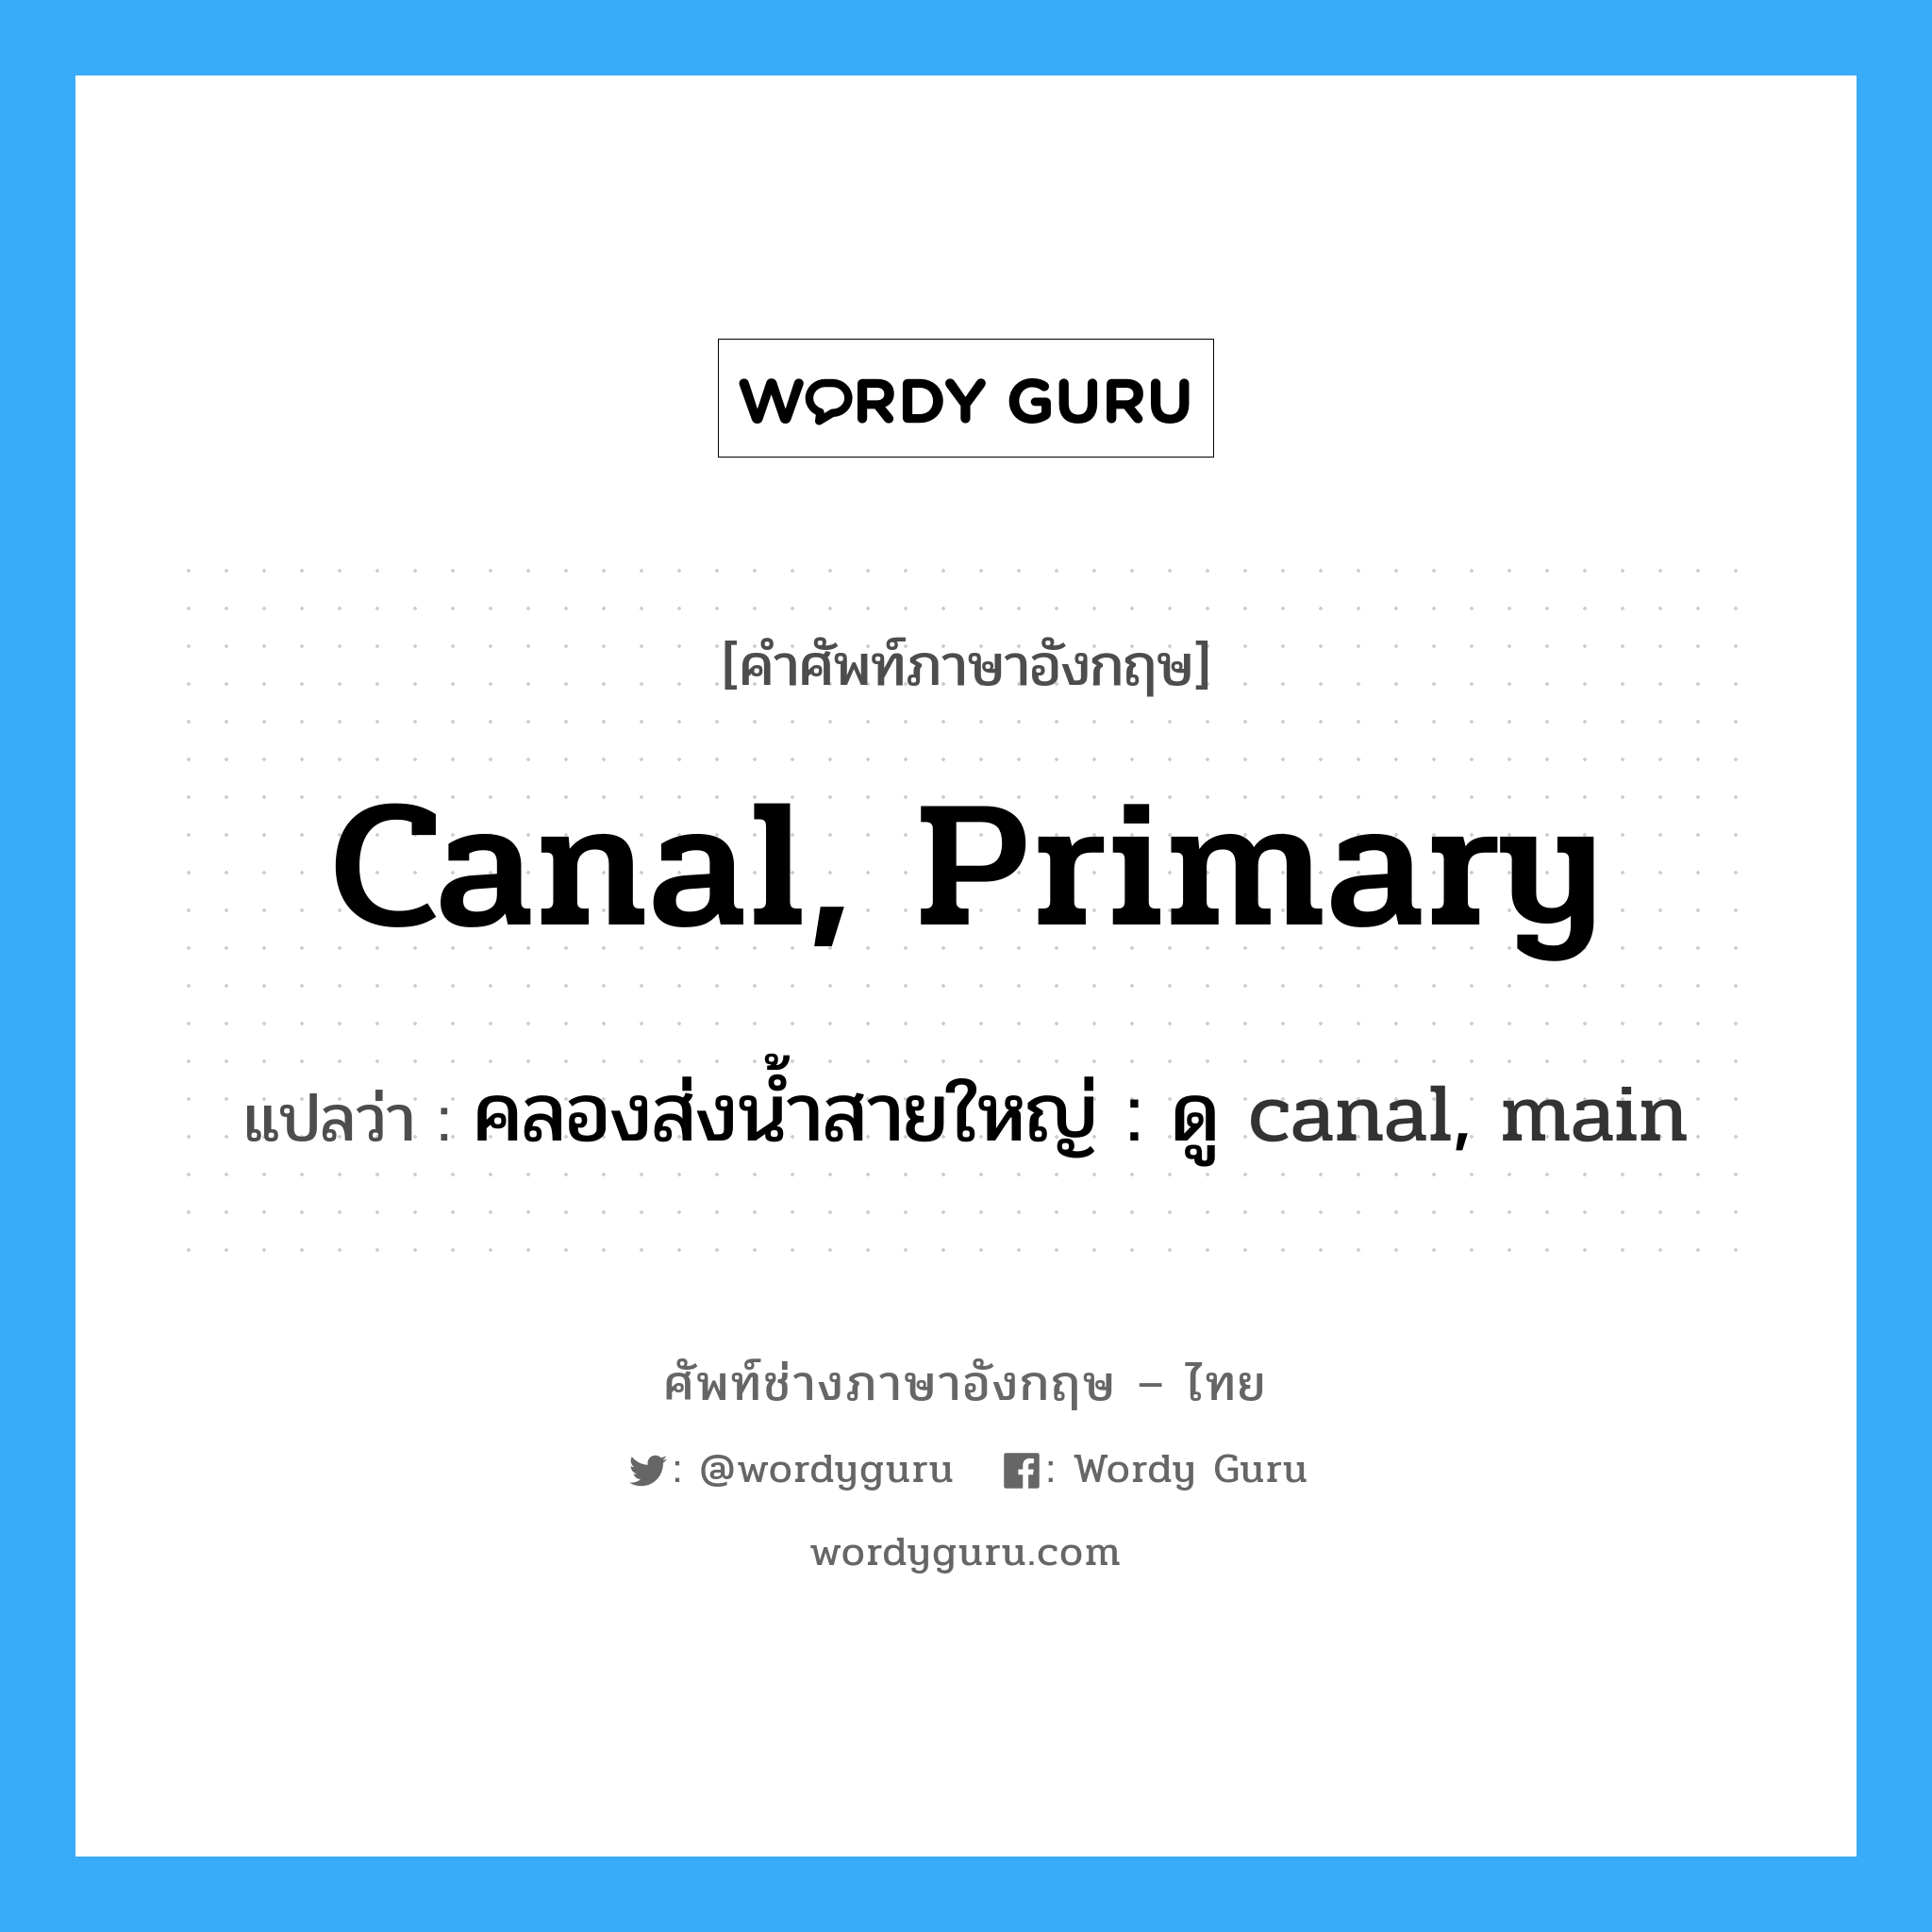 canal, primary แปลว่า?, คำศัพท์ช่างภาษาอังกฤษ - ไทย canal, primary คำศัพท์ภาษาอังกฤษ canal, primary แปลว่า คลองส่งน้ำสายใหญ่ : ดู canal, main